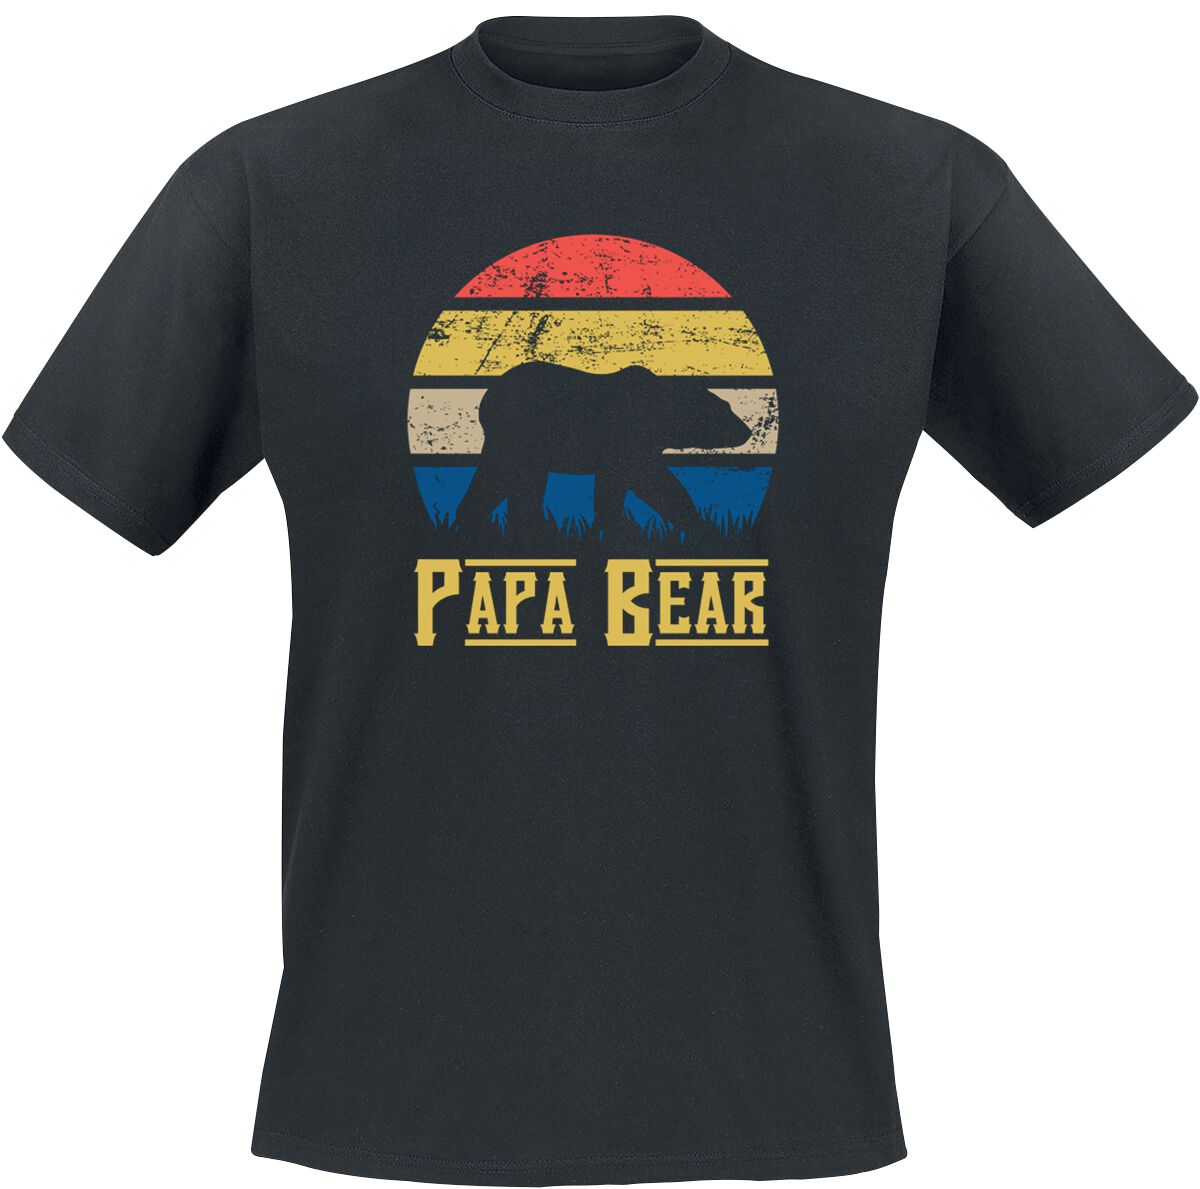 Familie & Freunde Papa Bear T-Shirt schwarz in 3XL